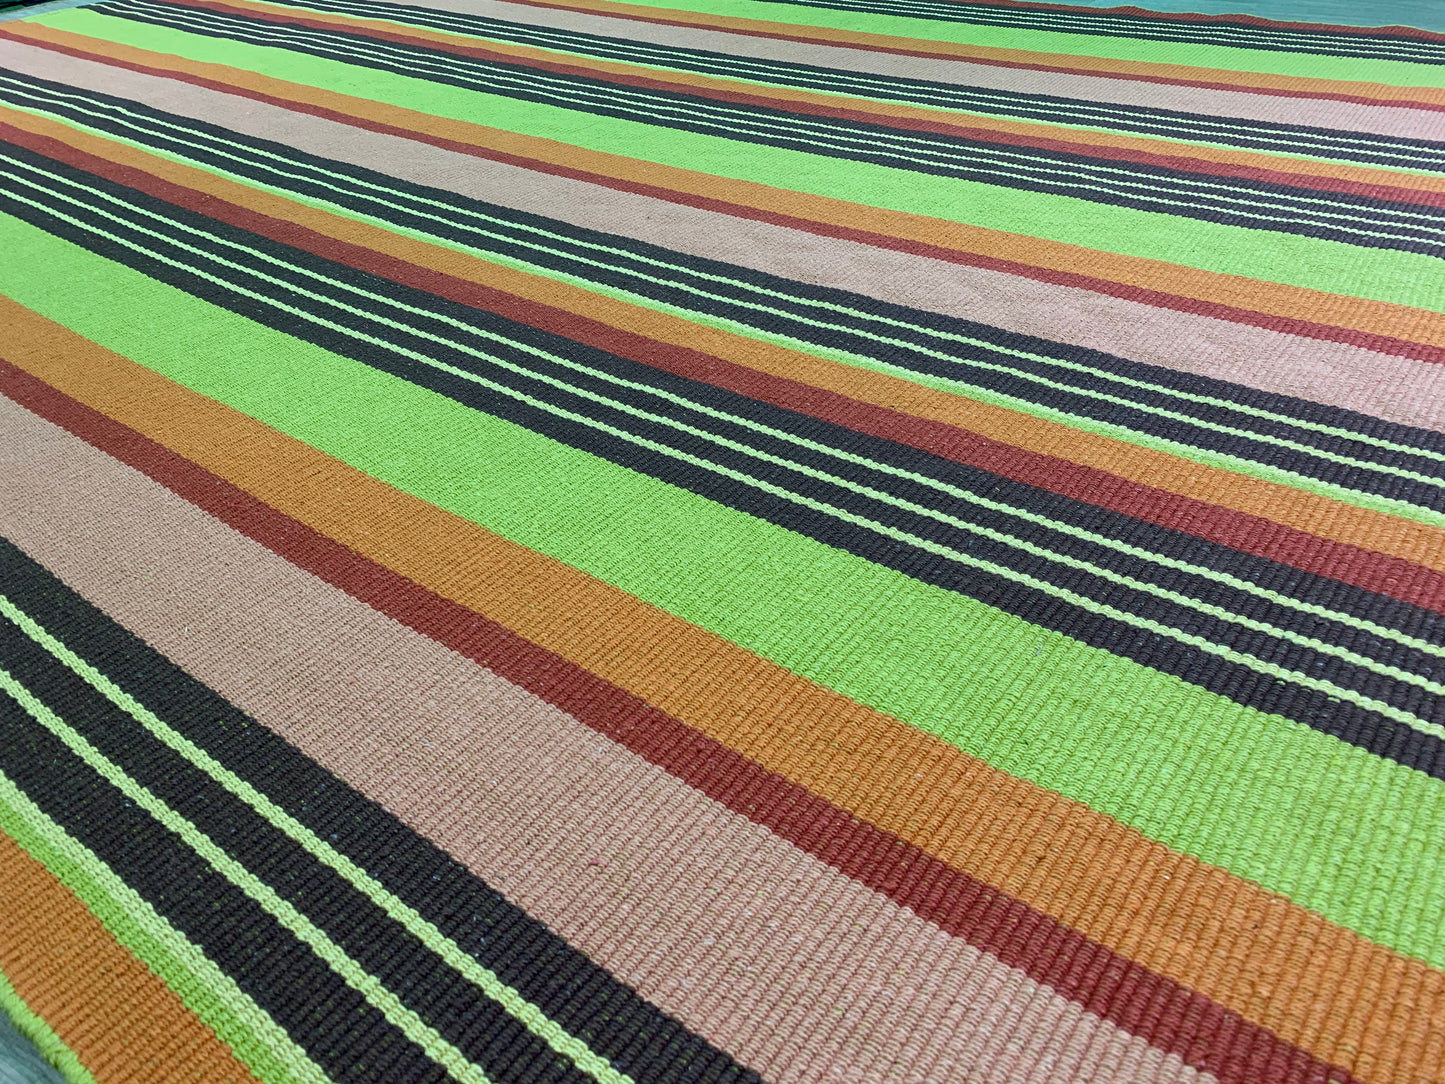 DB-516: Colorful striped rug